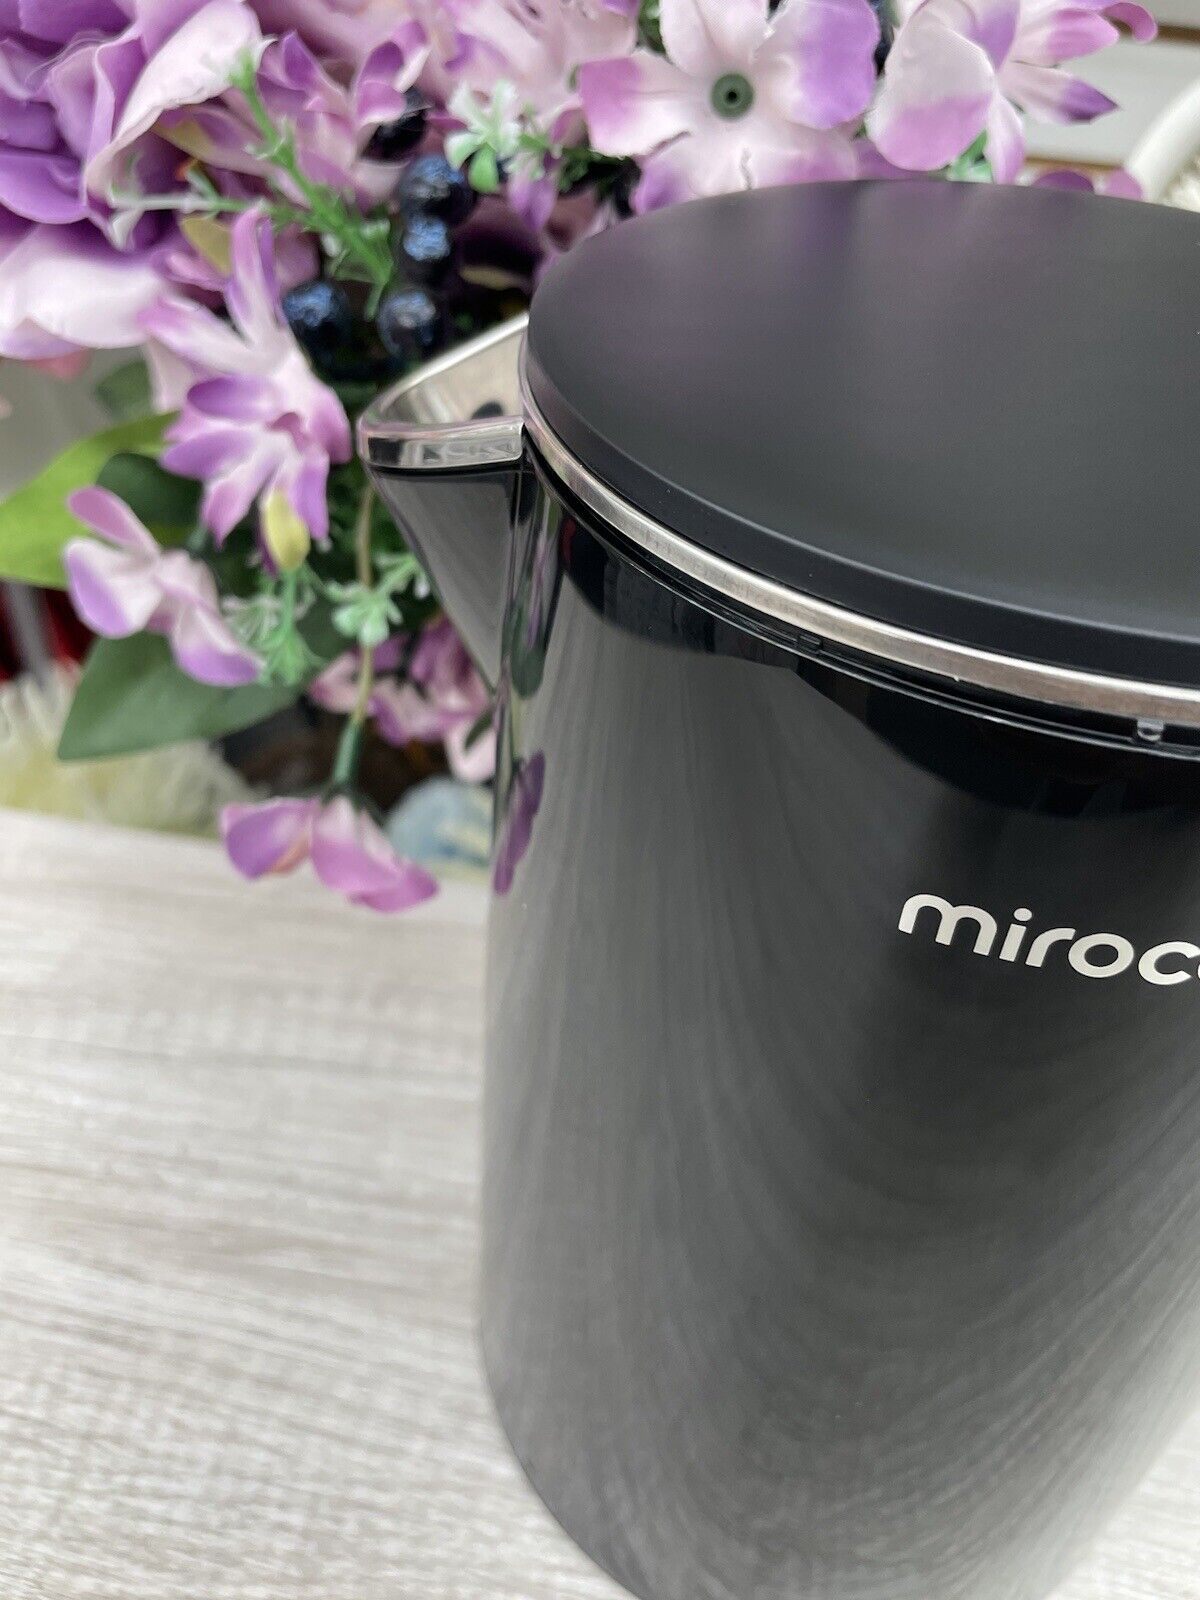 Miroco MI-EK003 1.5 qt. Cordless Electric Kettle for sale online